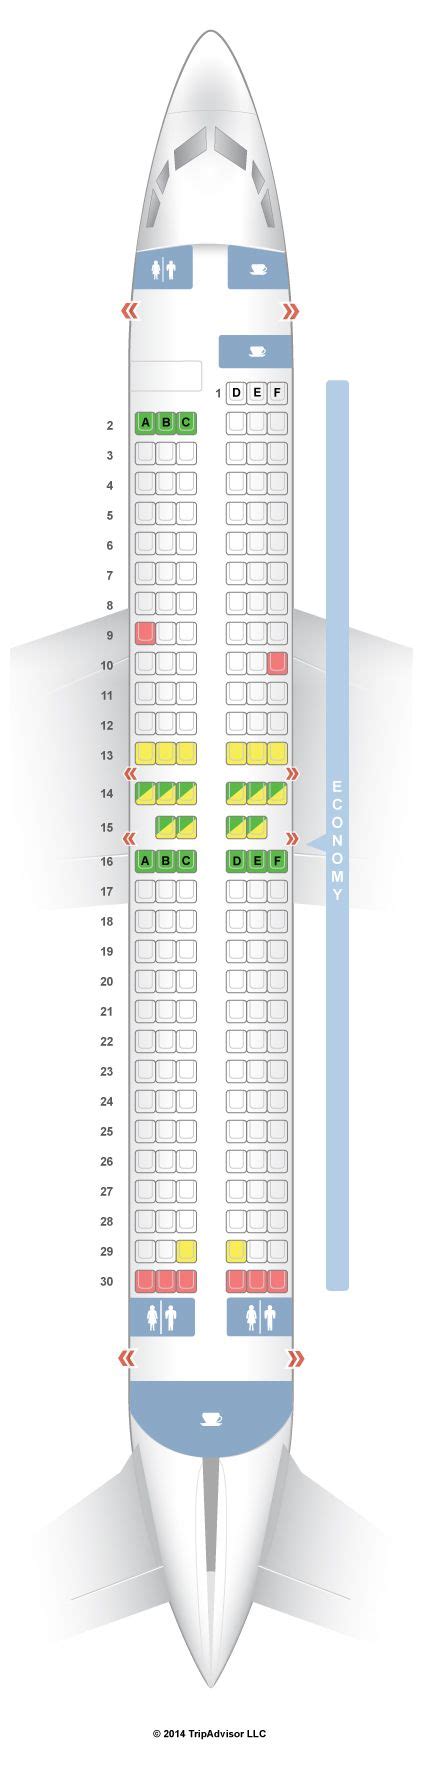 Boeing 737 Max 8 Seating Chart Air Canada